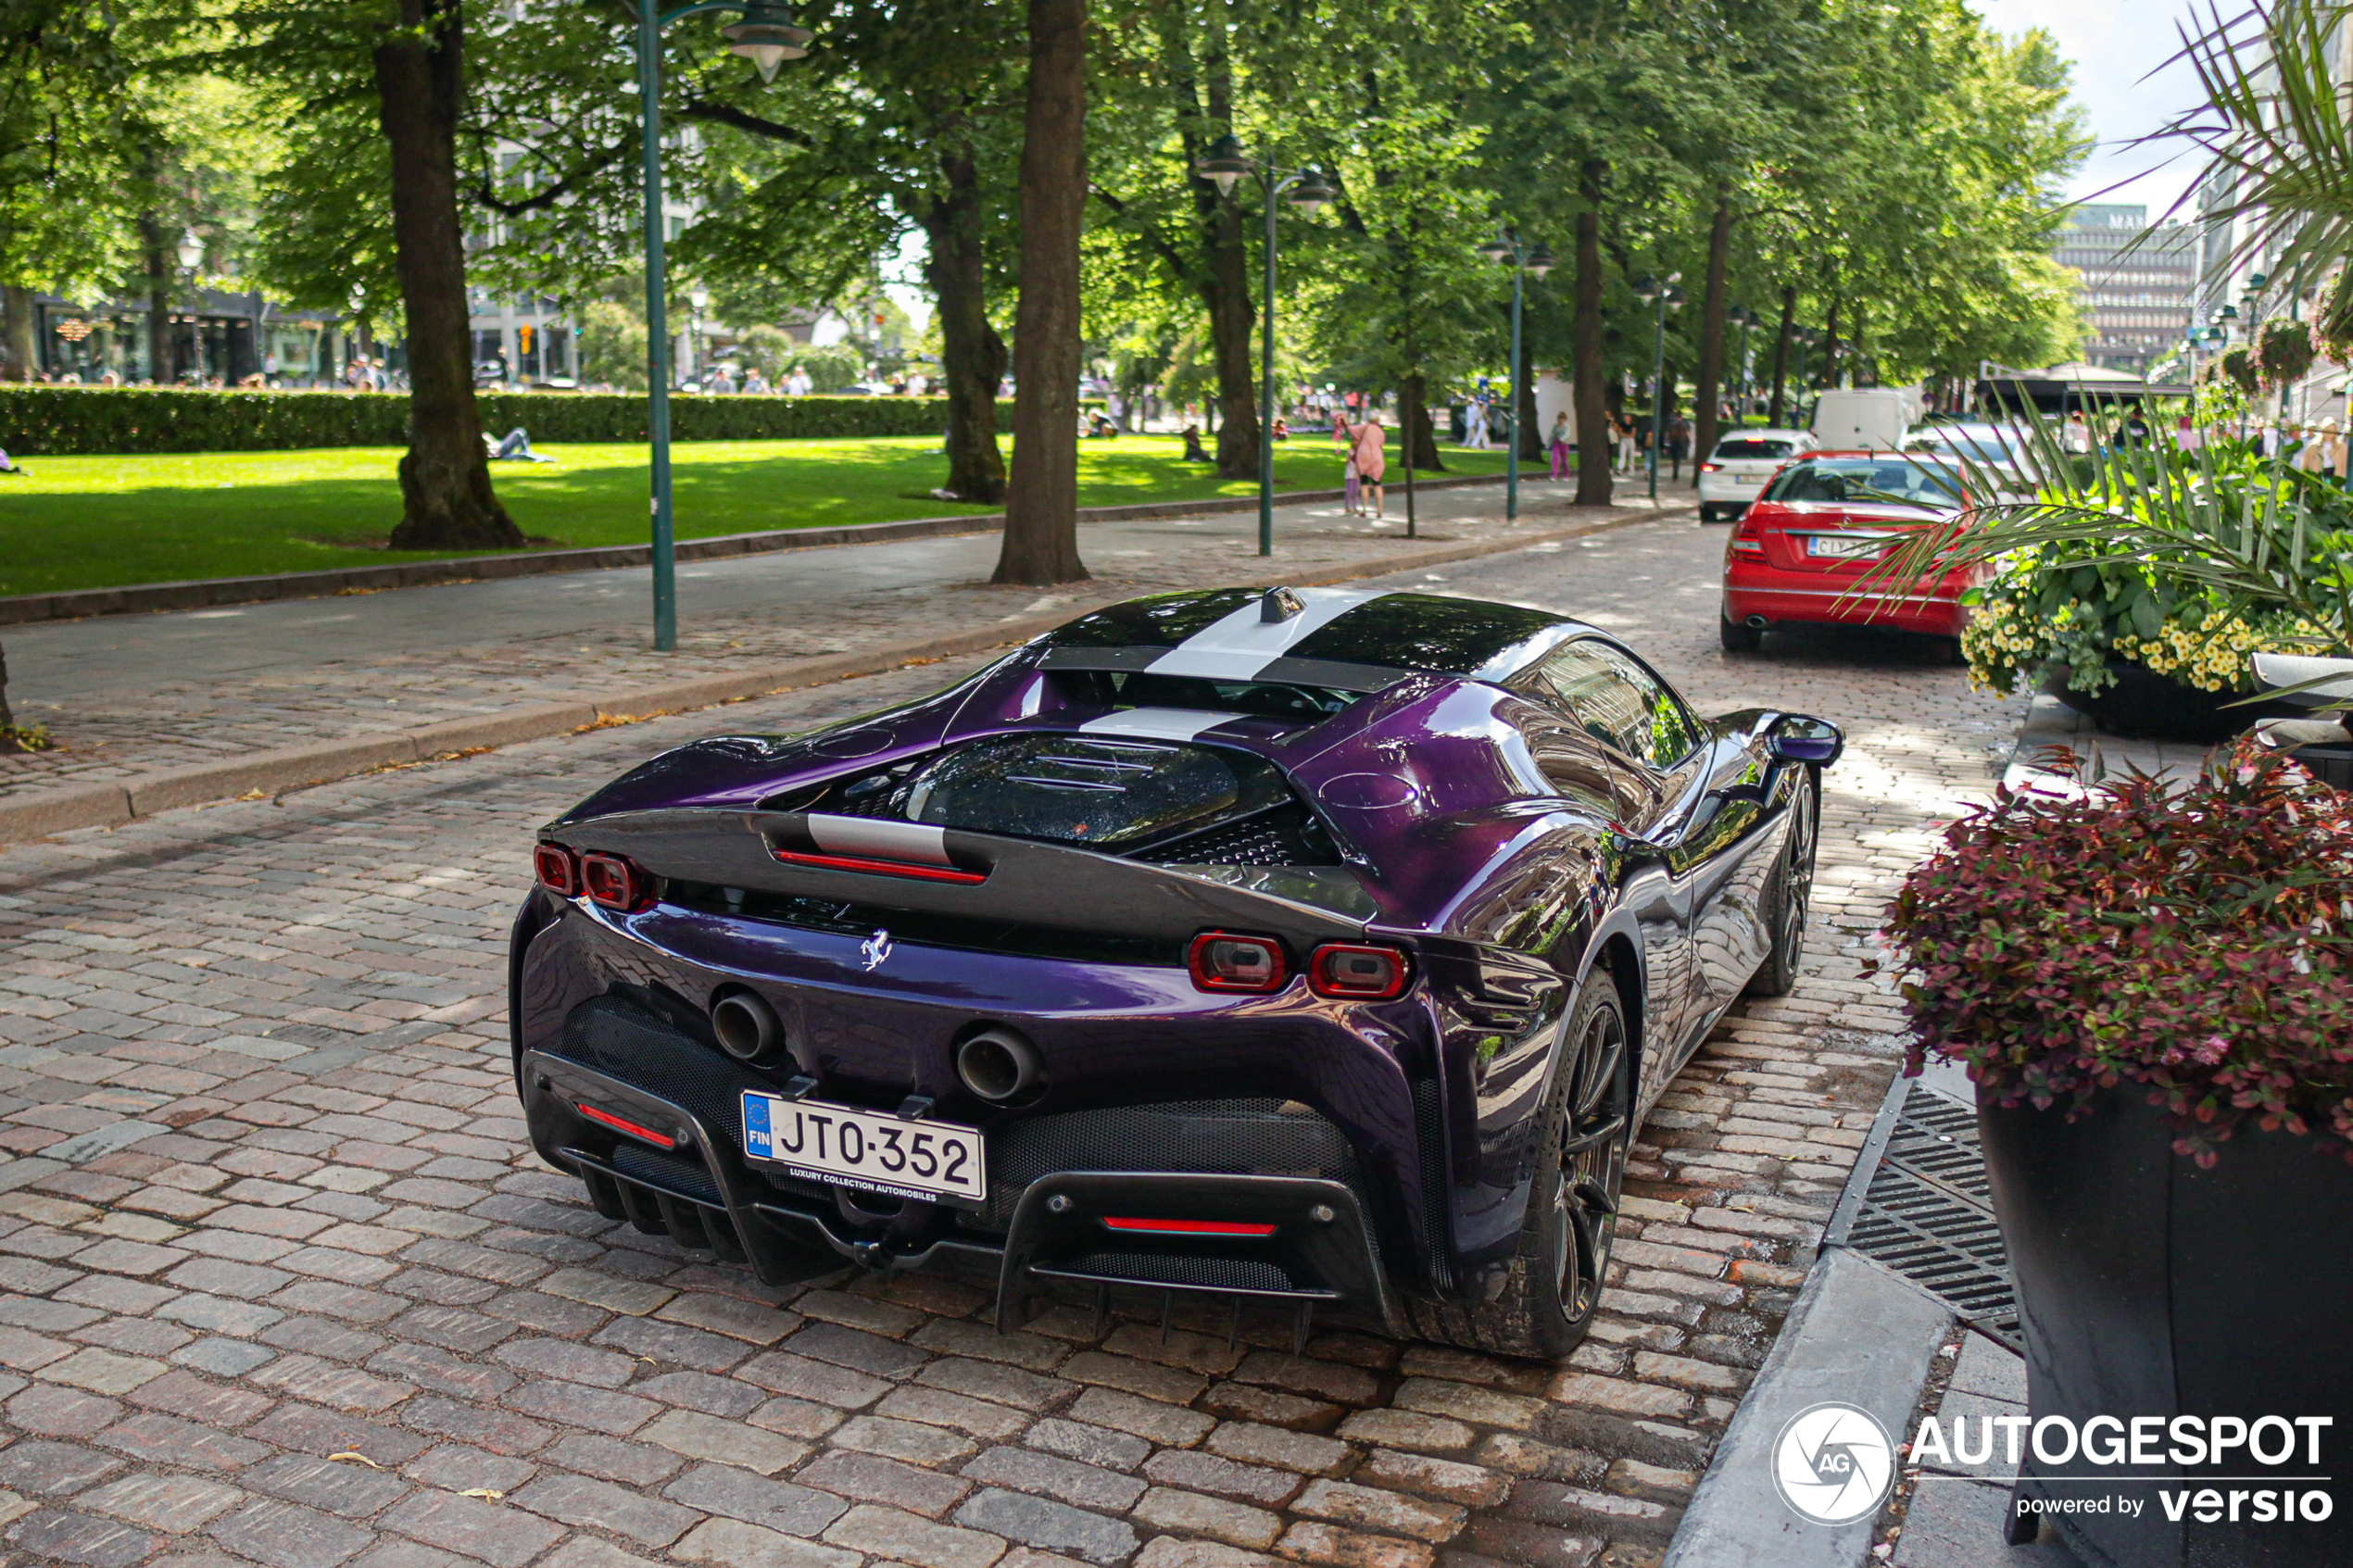 Izuzetno lep Ferrari sf90 u Helsinkiju